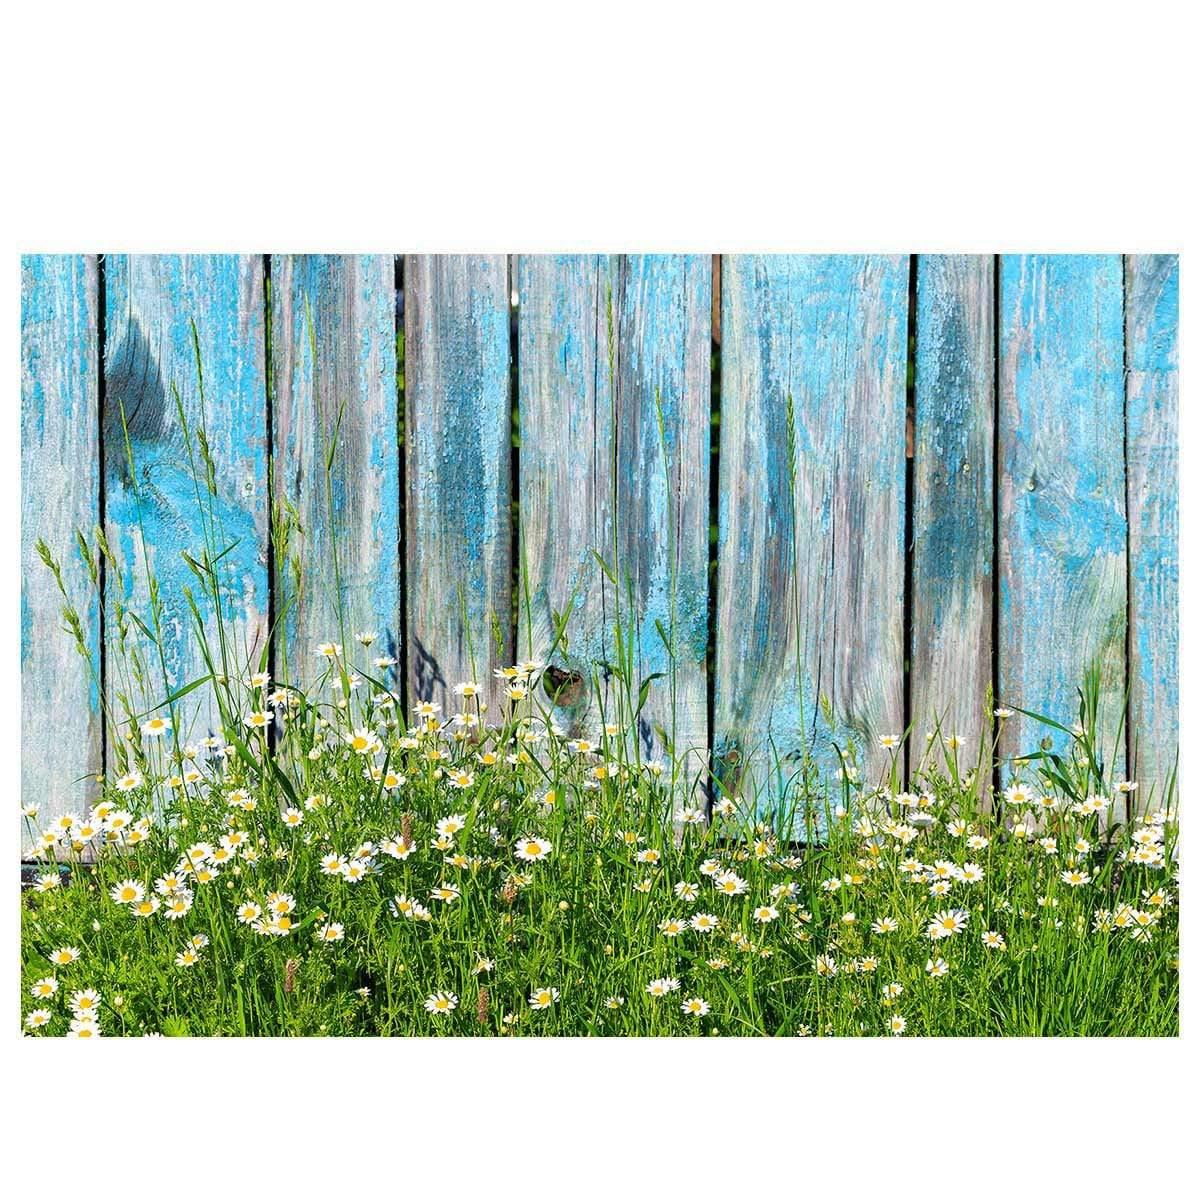 Allenjoy Blue Wooden Wall White Wildflower Bush Spring Backdrop - Allenjoystudio